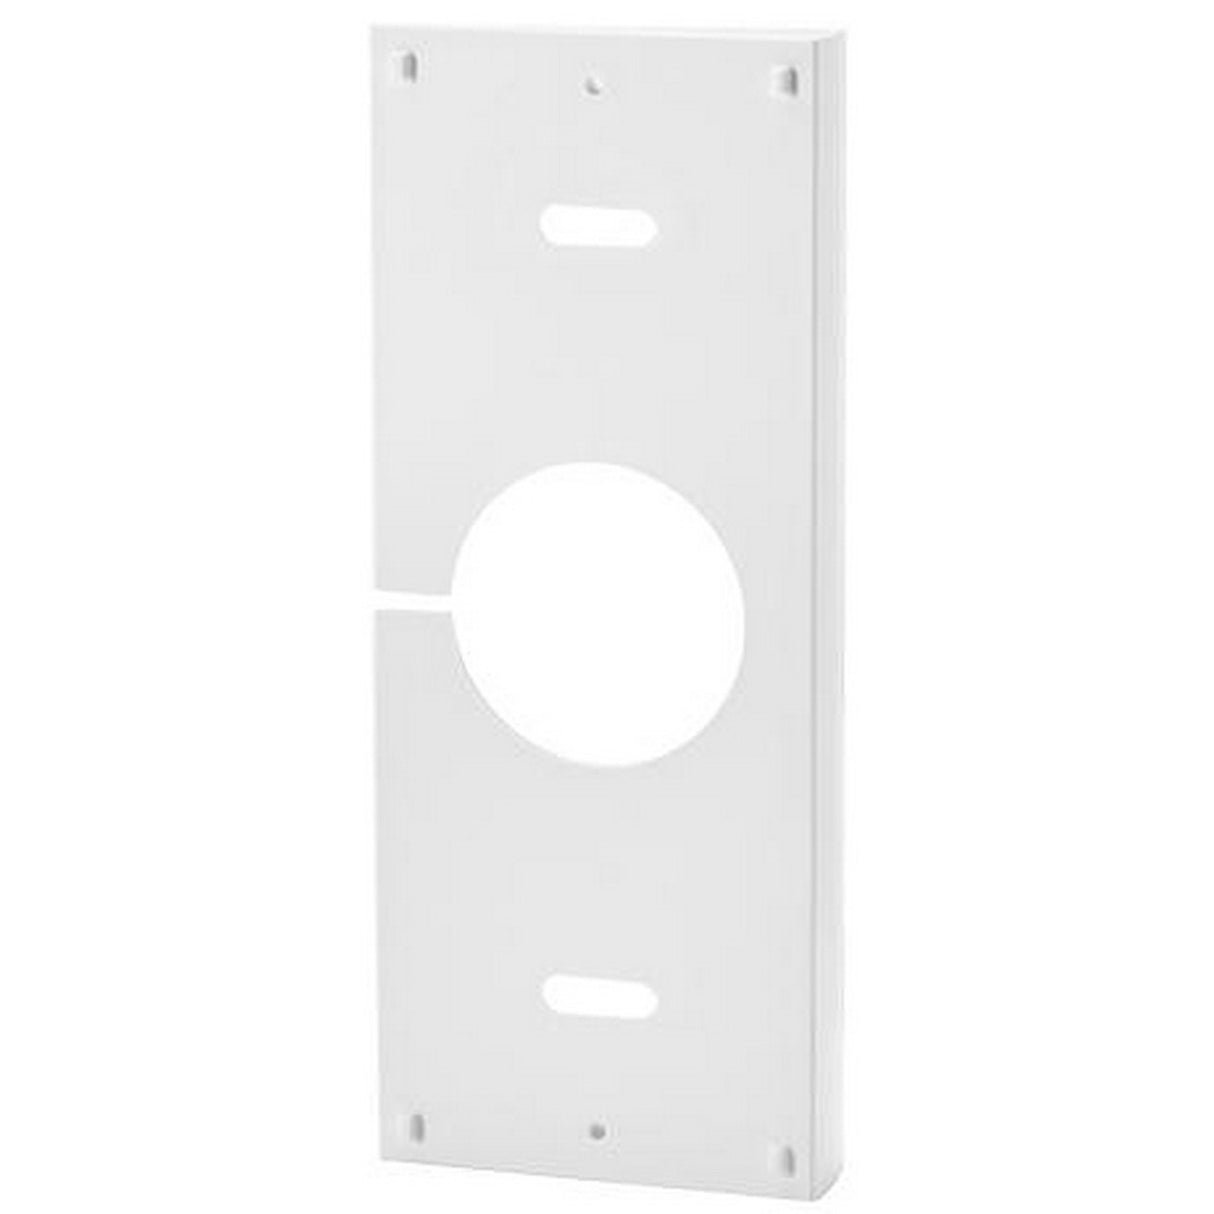 Ring Pro Corner Kit | Installation Mount Kit for Doorbell Pro